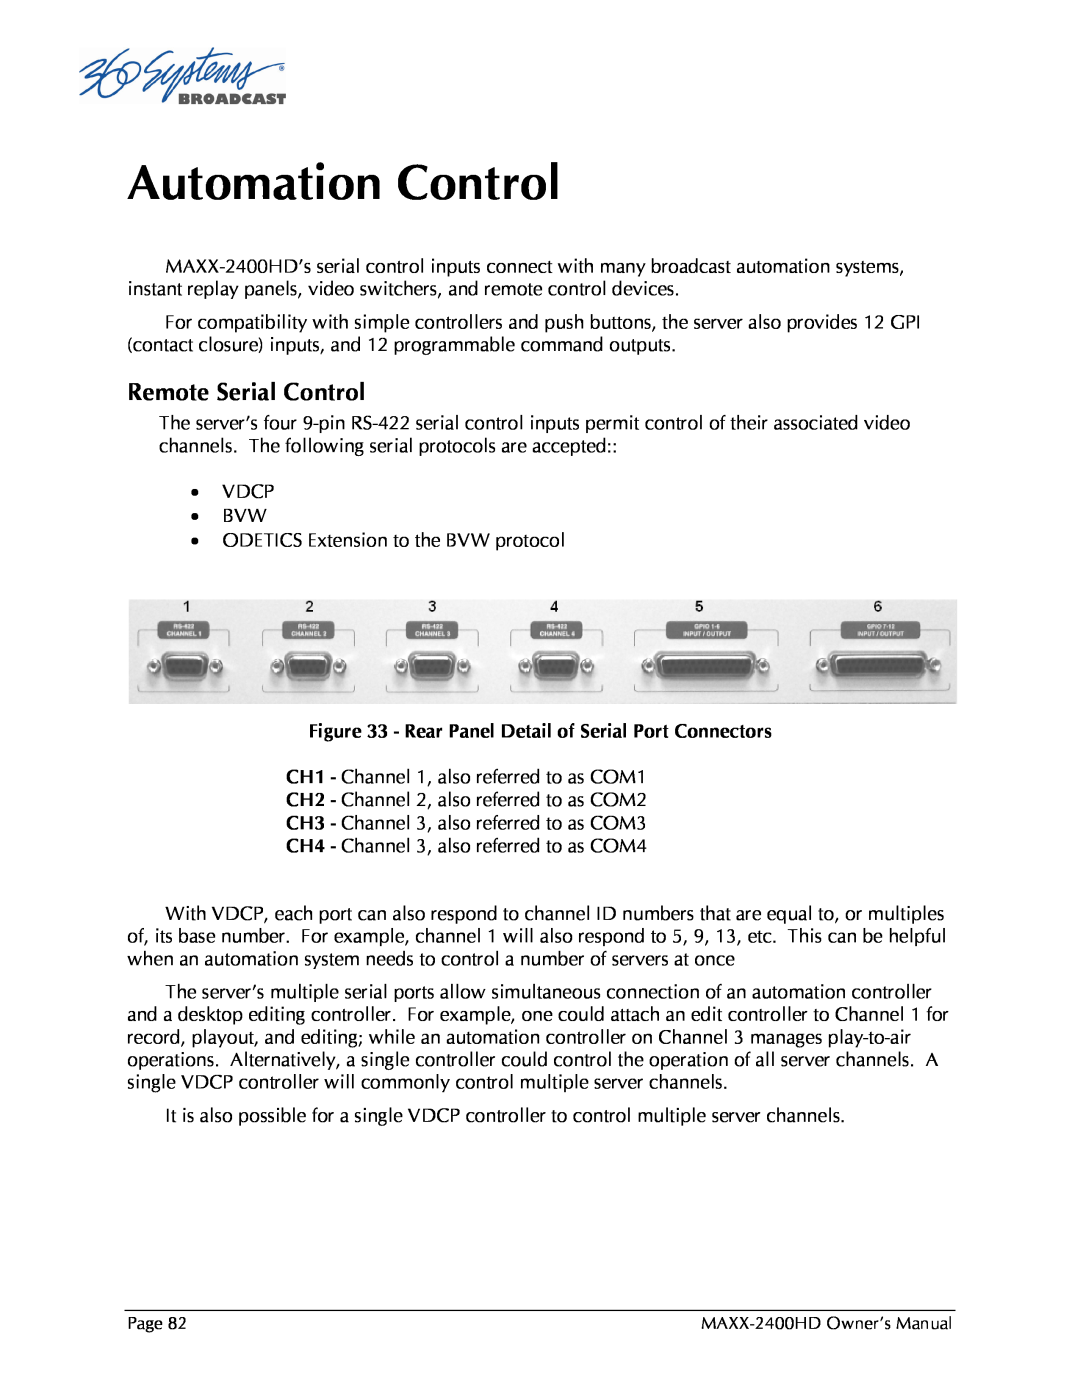 Maxxsonics MAXX-2400HD manual Automation Control, Remote Serial Control 